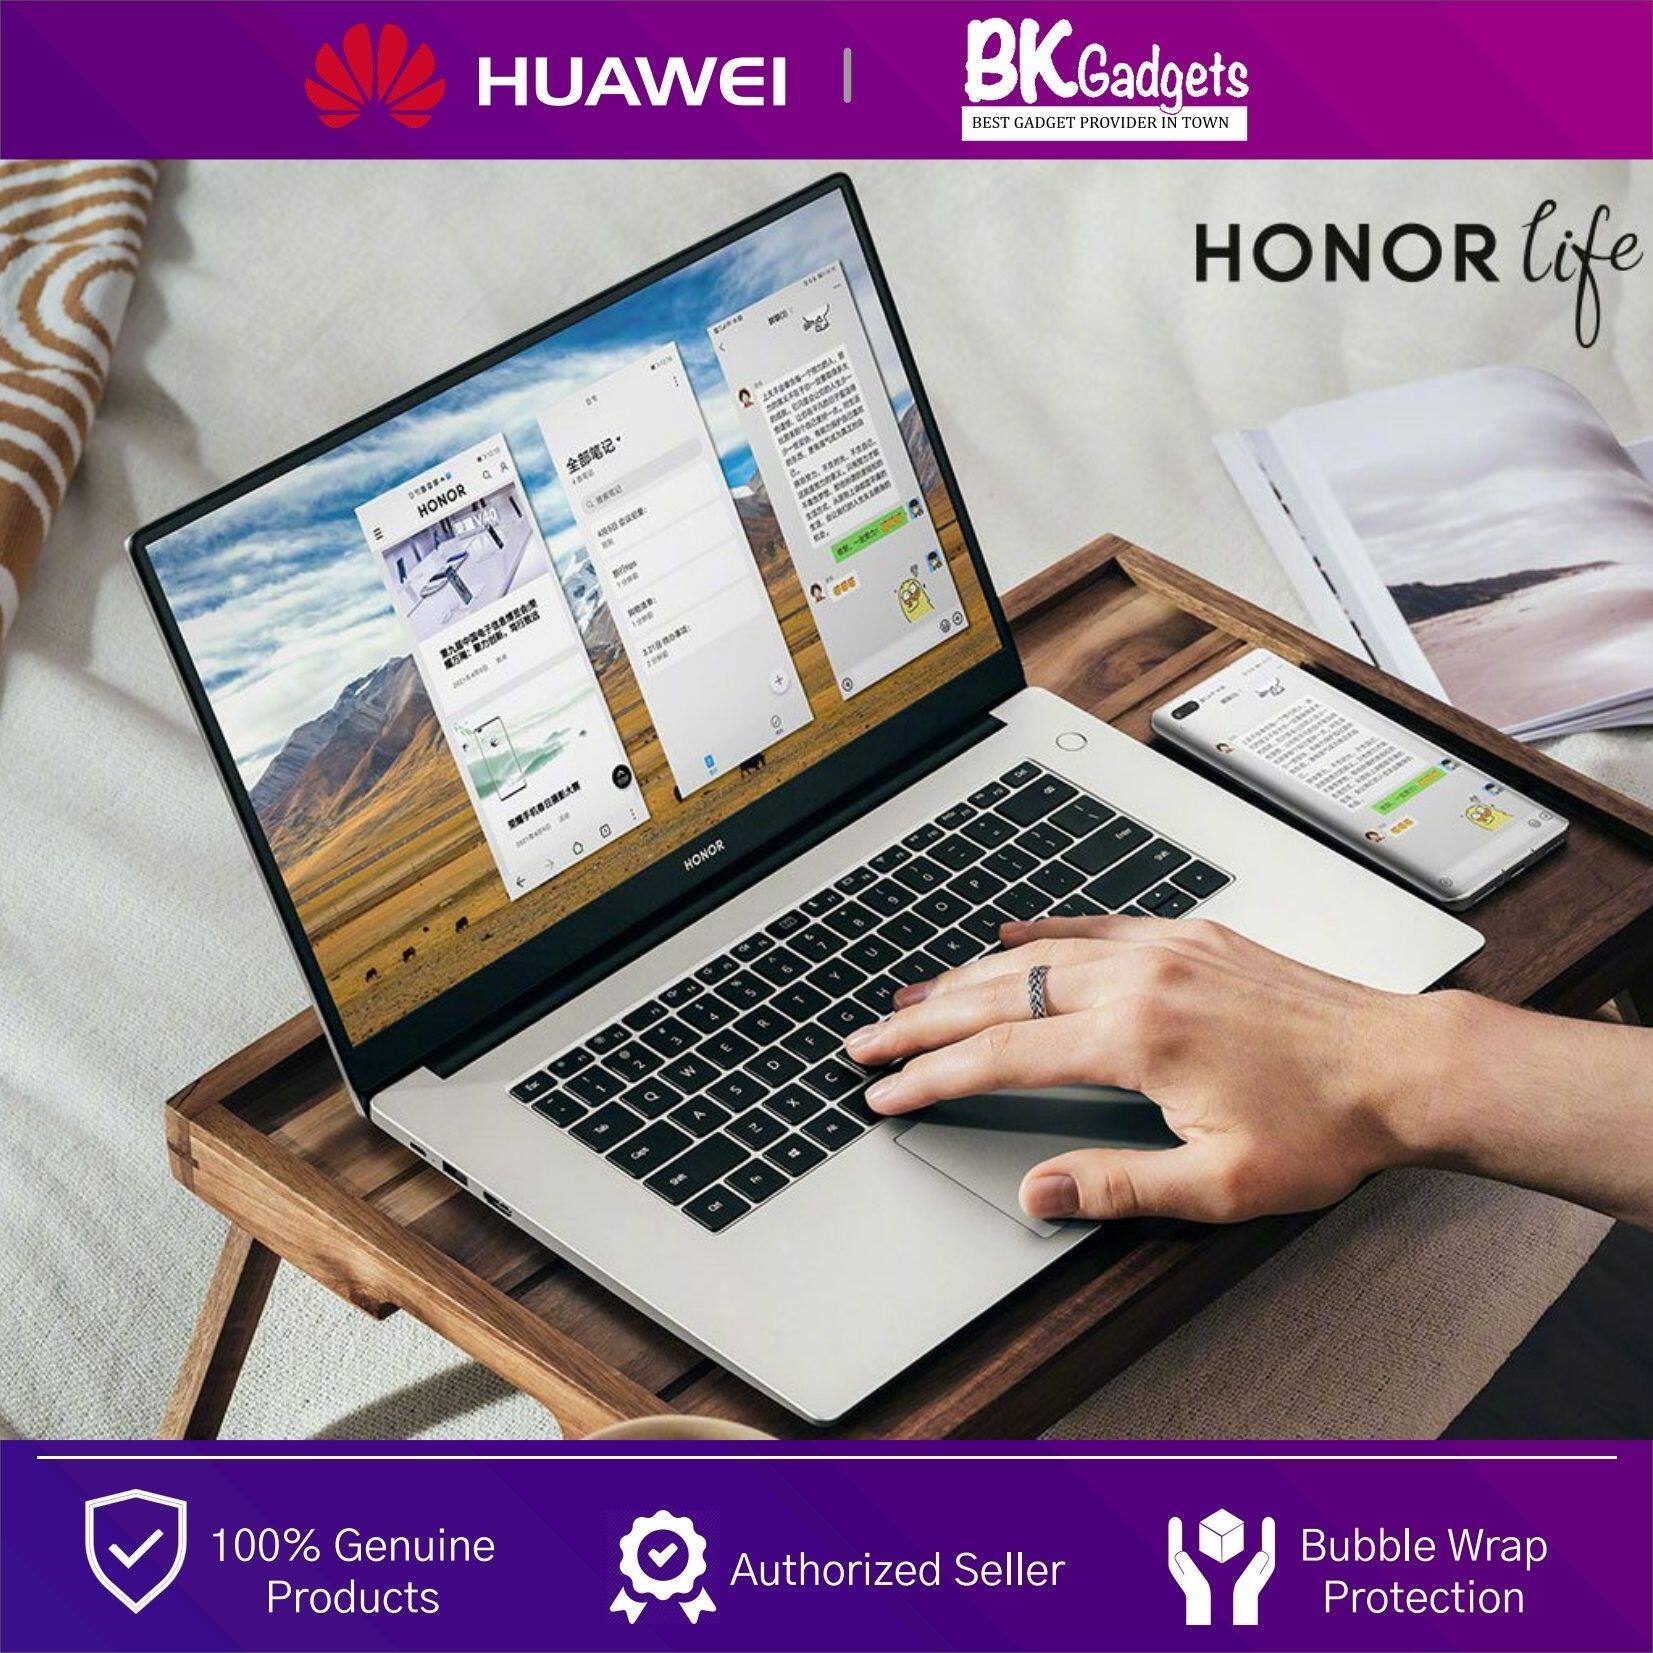 HONOR MagicBook X15 i3 2021 [ 8GB + 256GB + Intel UHD ] Space Grey Laptop | FullView Display | Fingerprint Power Button | 65W Fast Charging | Aluminum Metal Body